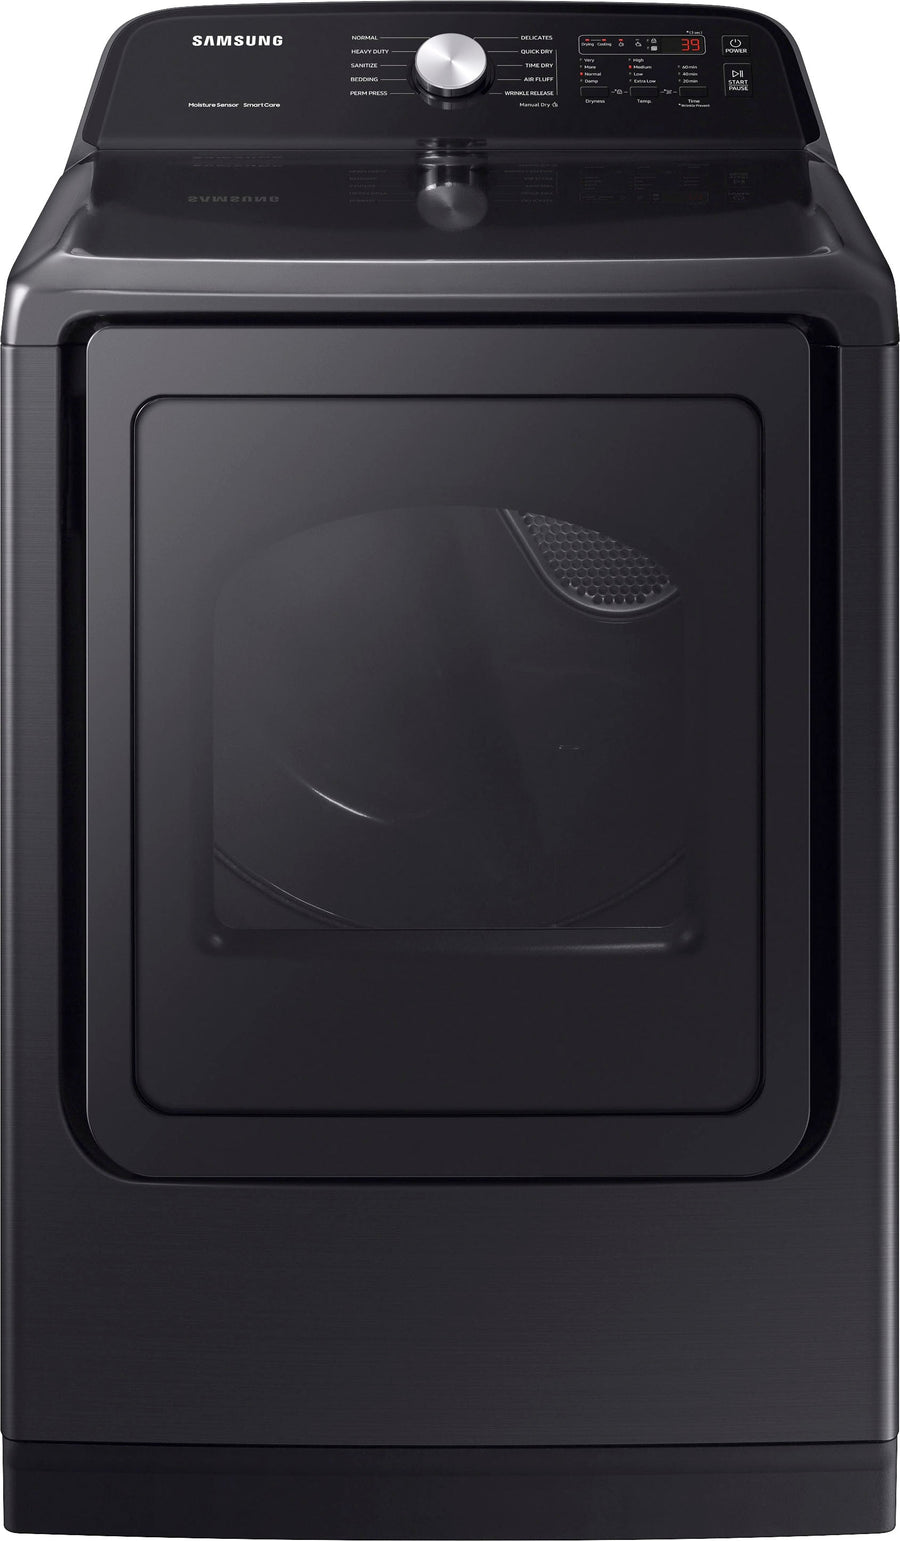 Samsung - 7.4 cu. ft. Electric Dryer with Sensor Dry - Brushed black_0